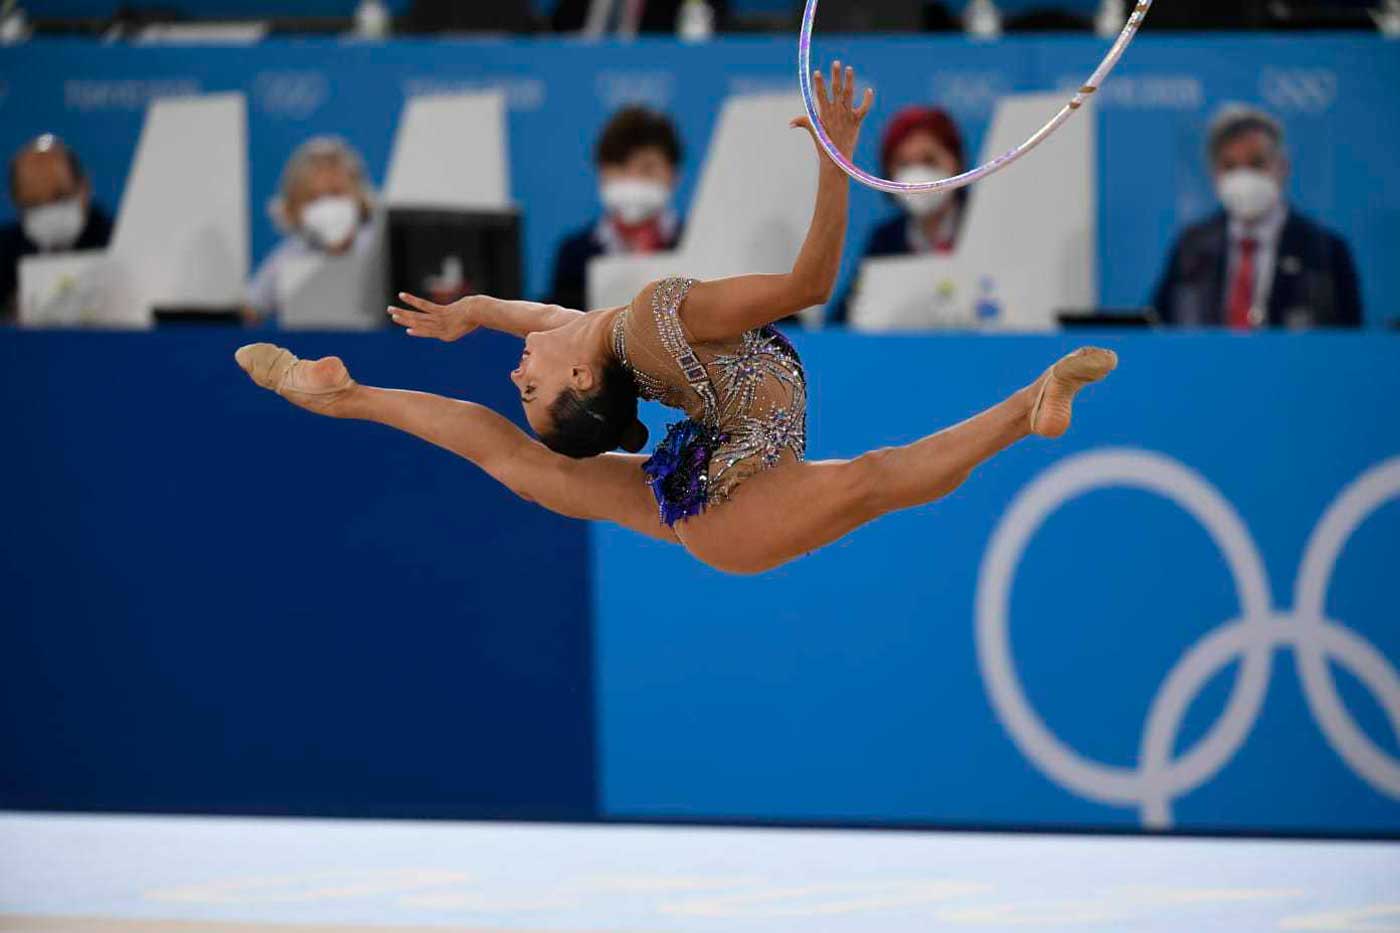 Israeli rhythmic gymnasts qualify for the final round of the Olympics